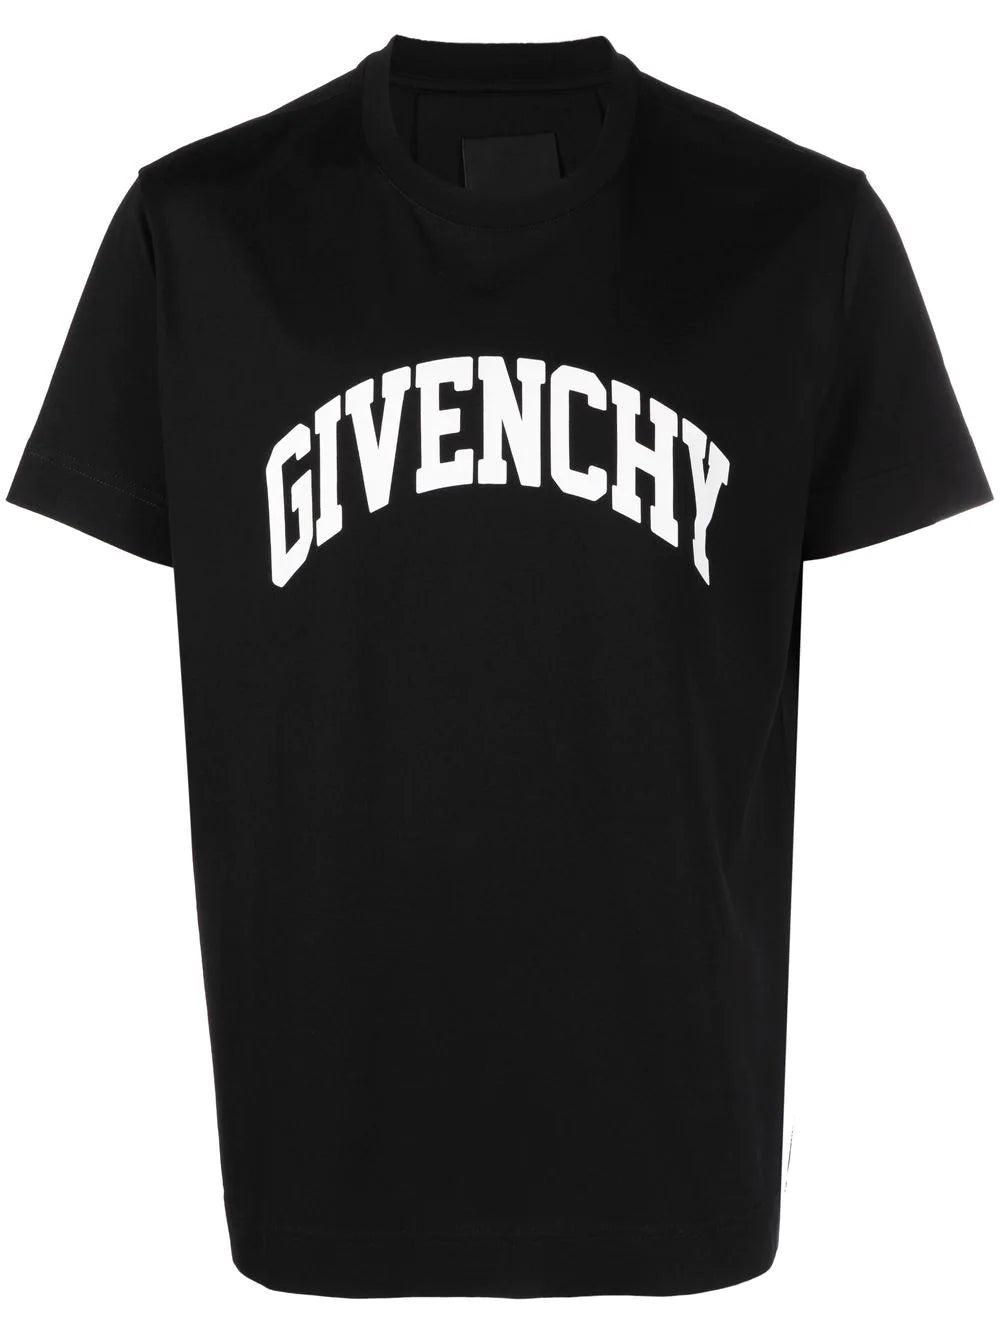 GIVENCHY PARIS Tシャツ